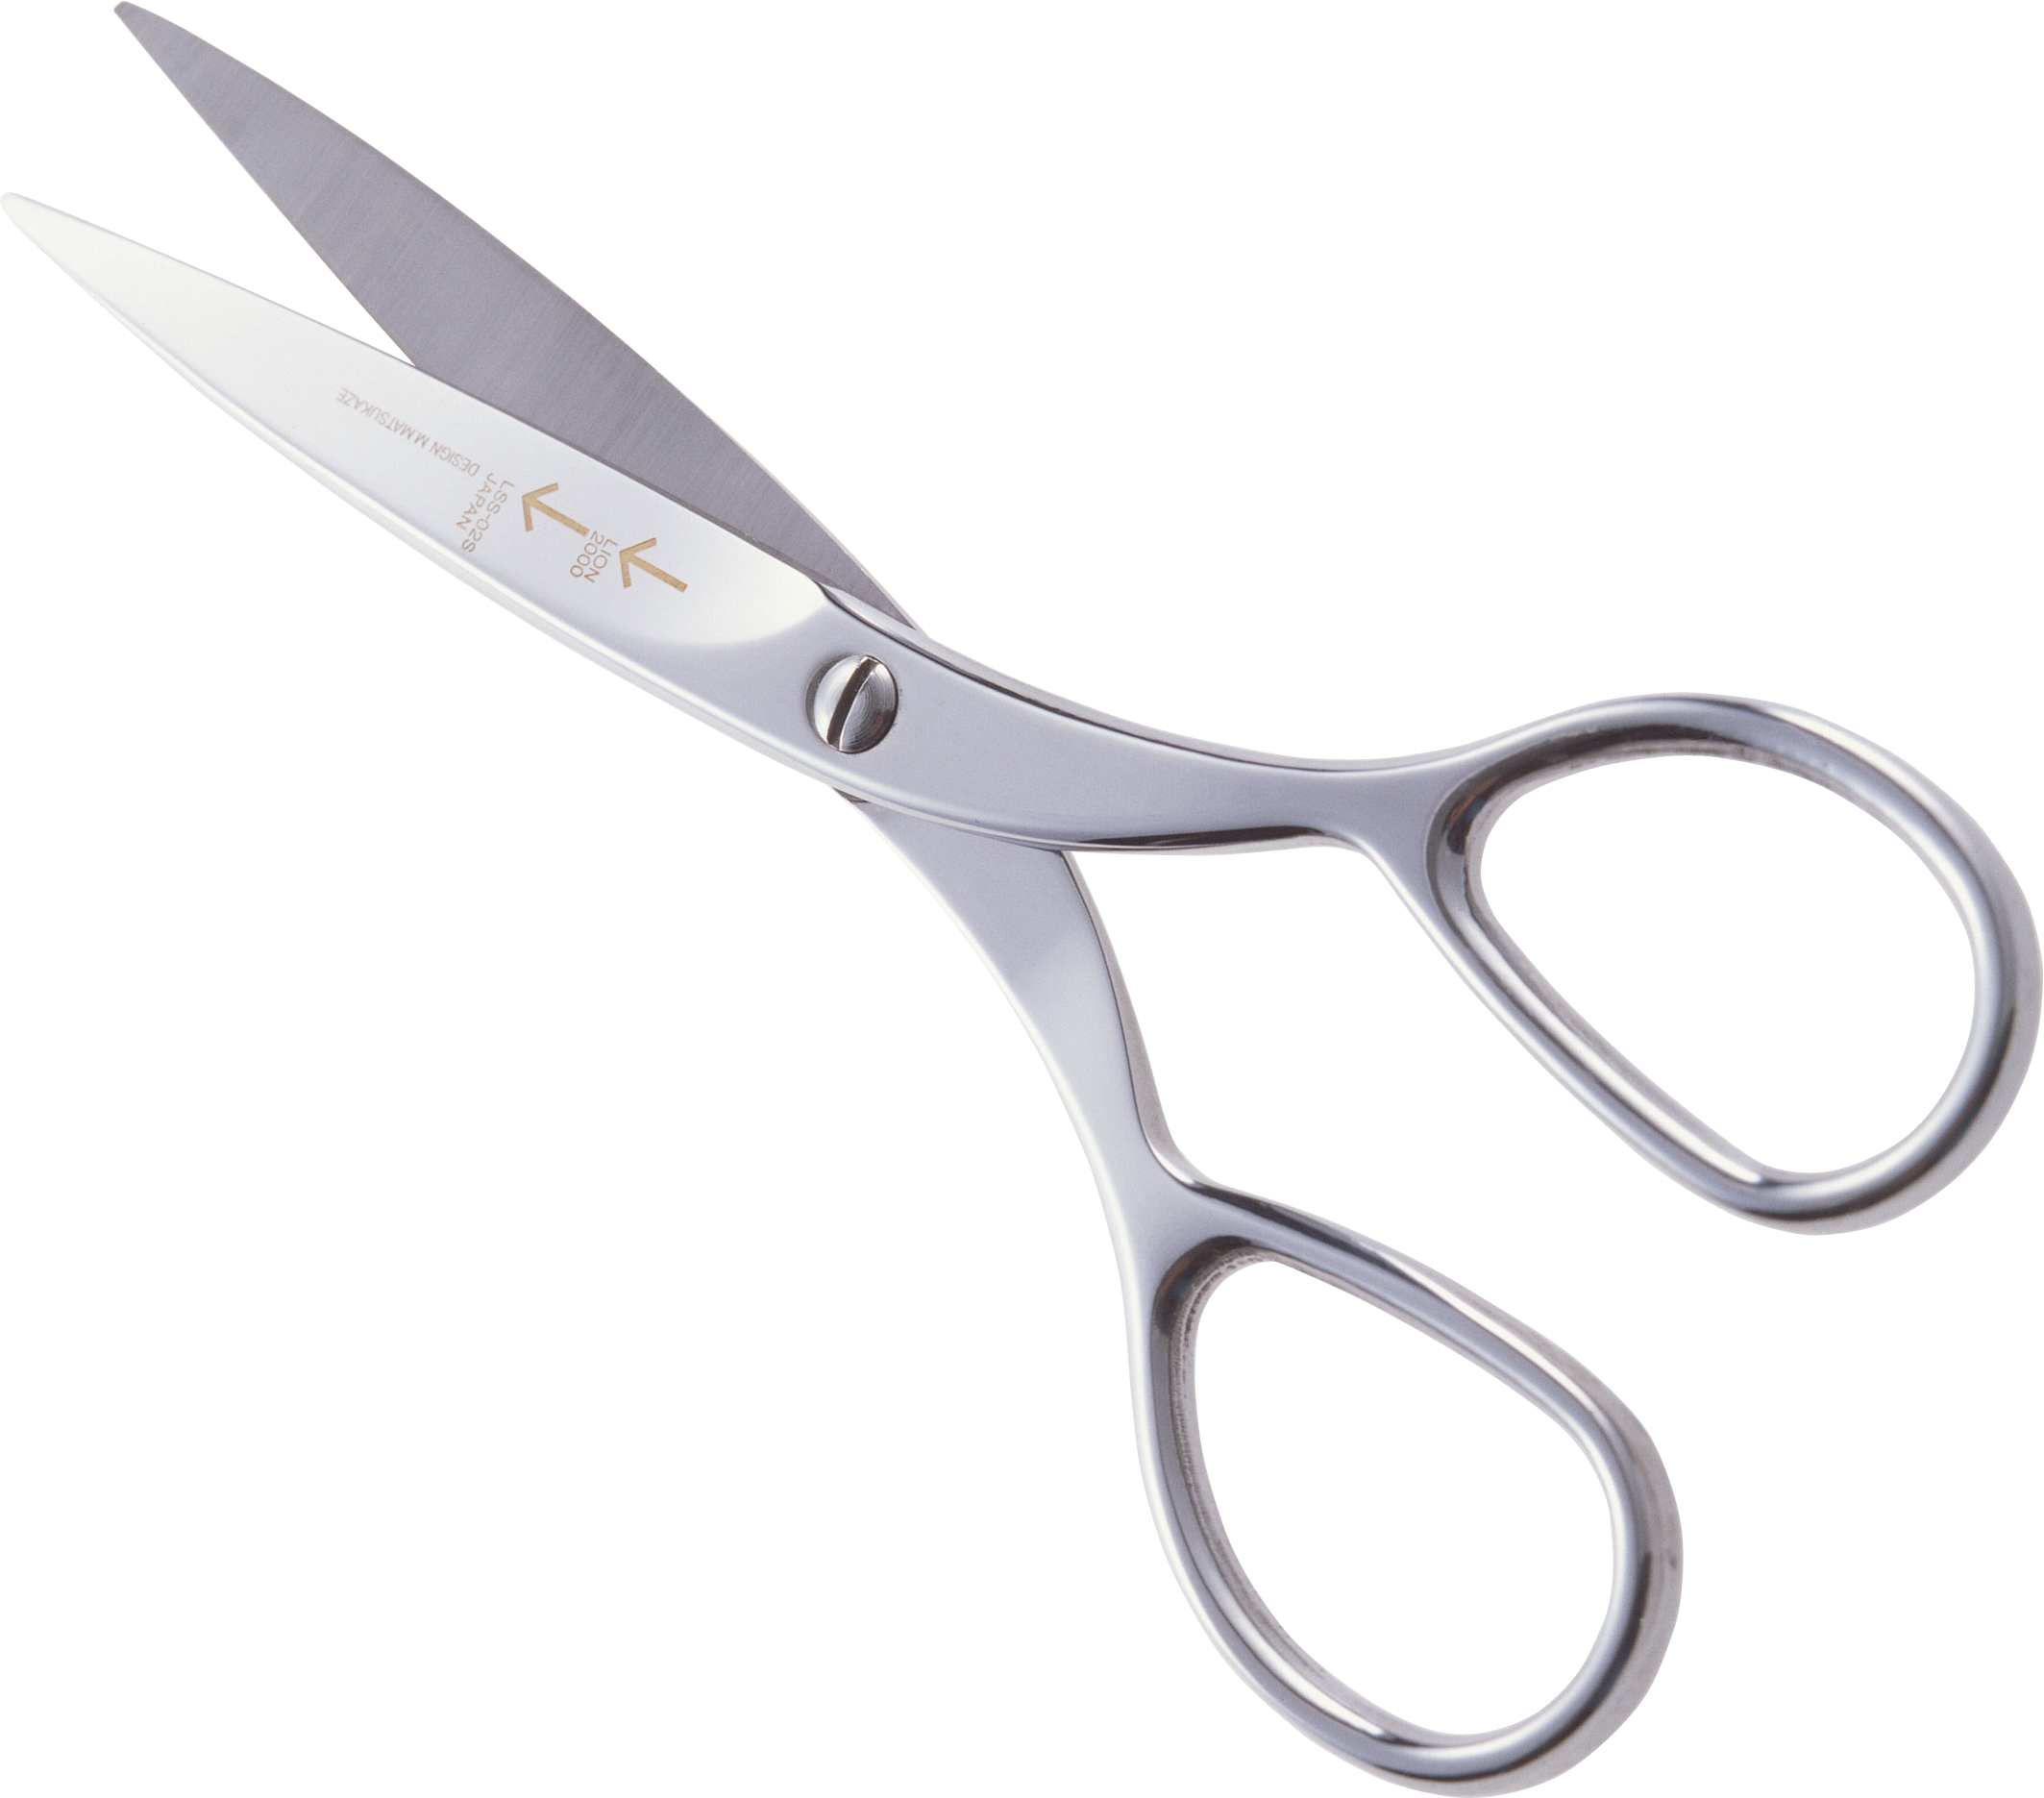 Hair scissors PNG image, Scissors PNG - Free PNG